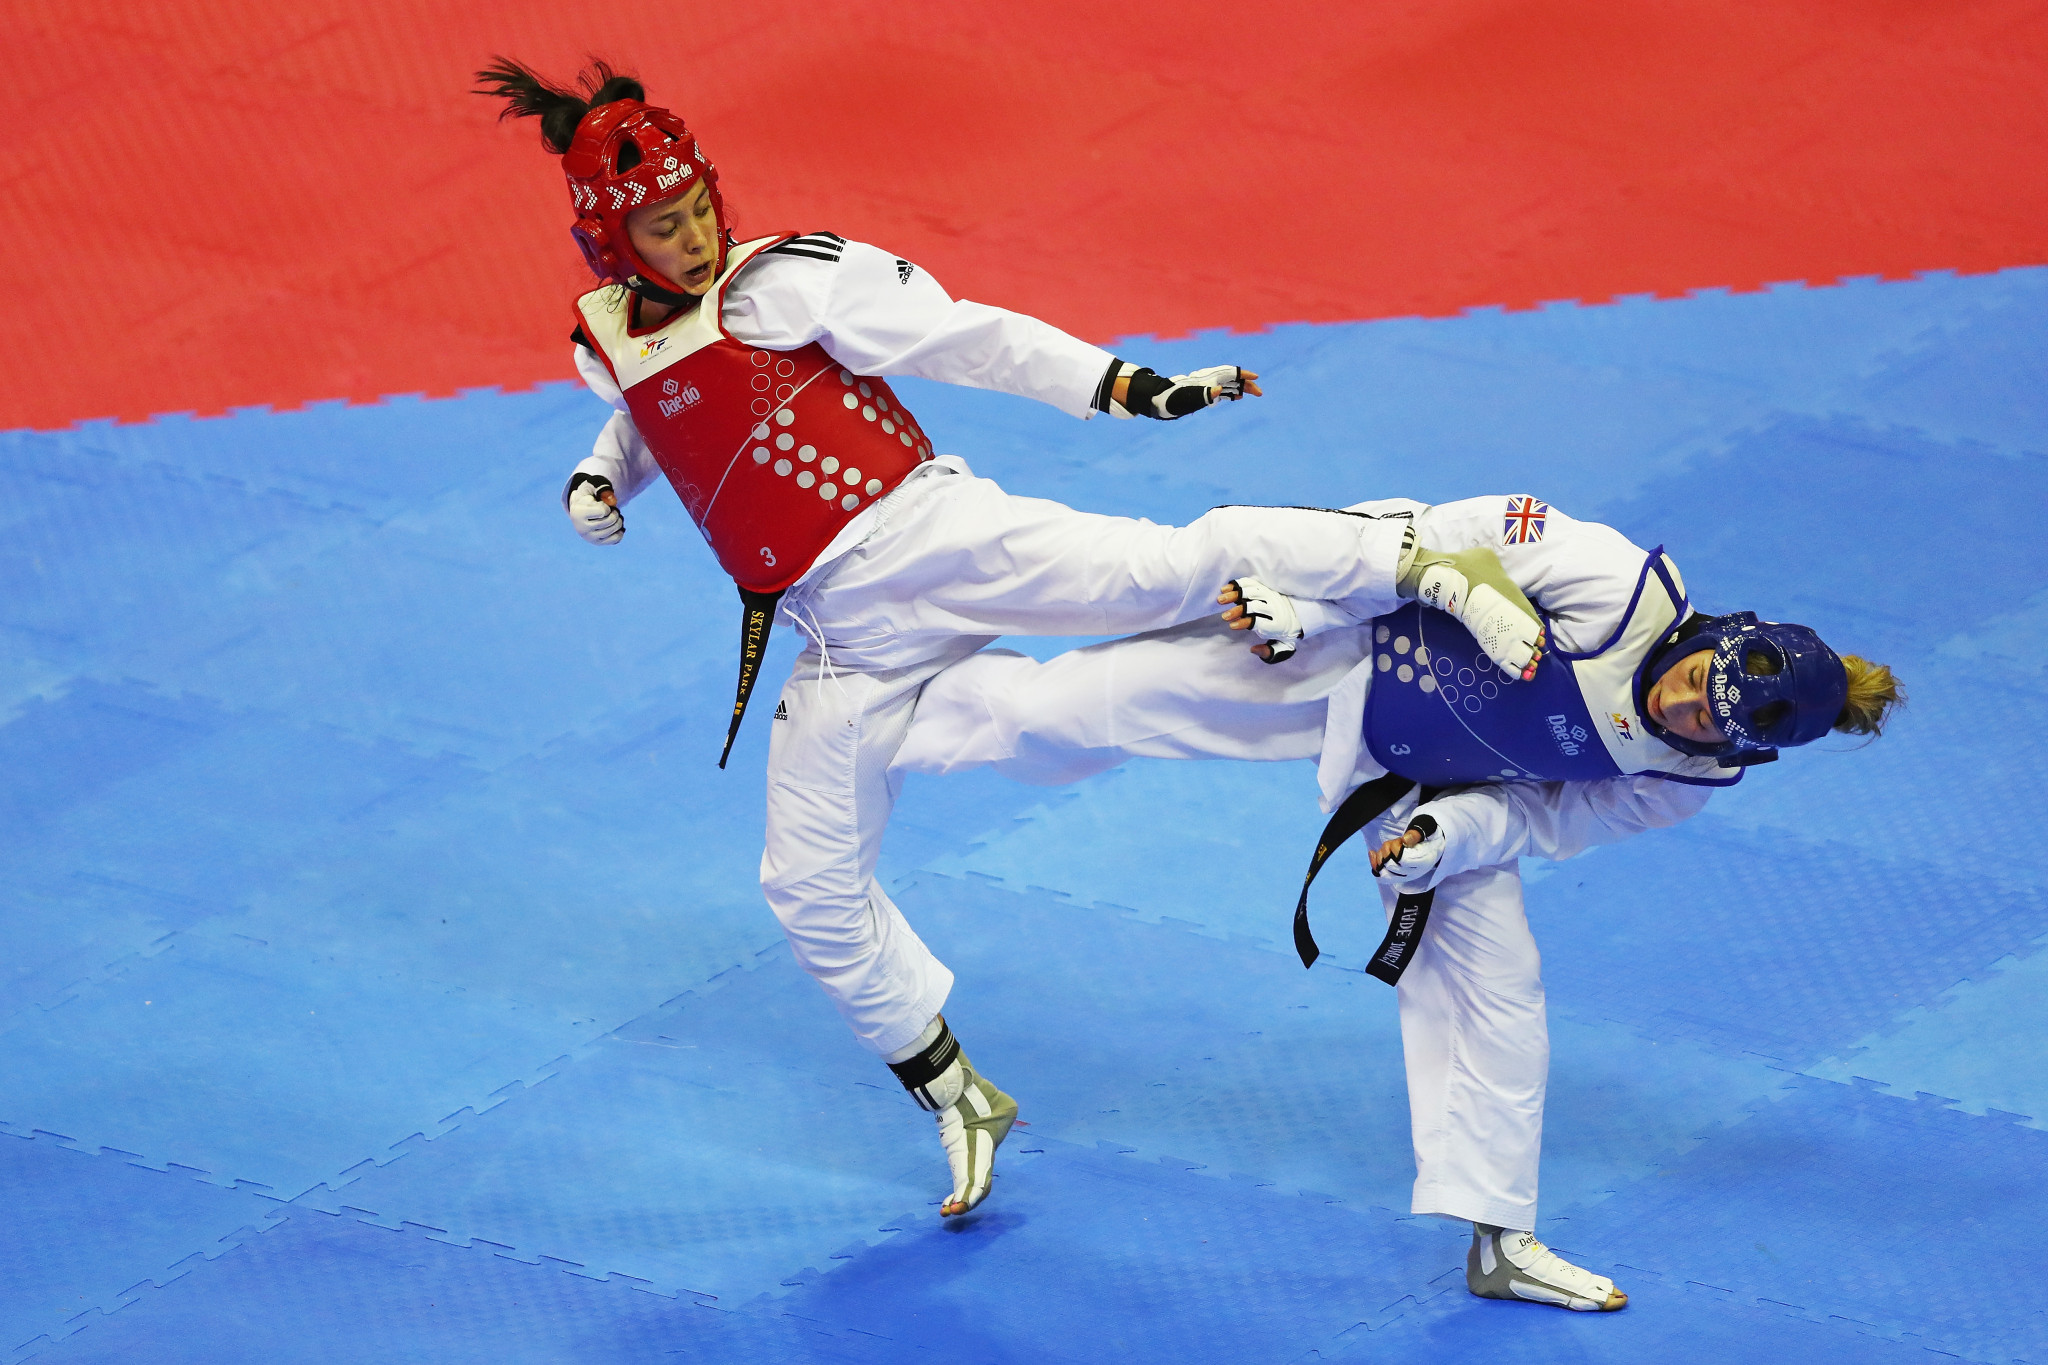 World Taekwondo target being added to Commonwealth Games at Birmingham 2022